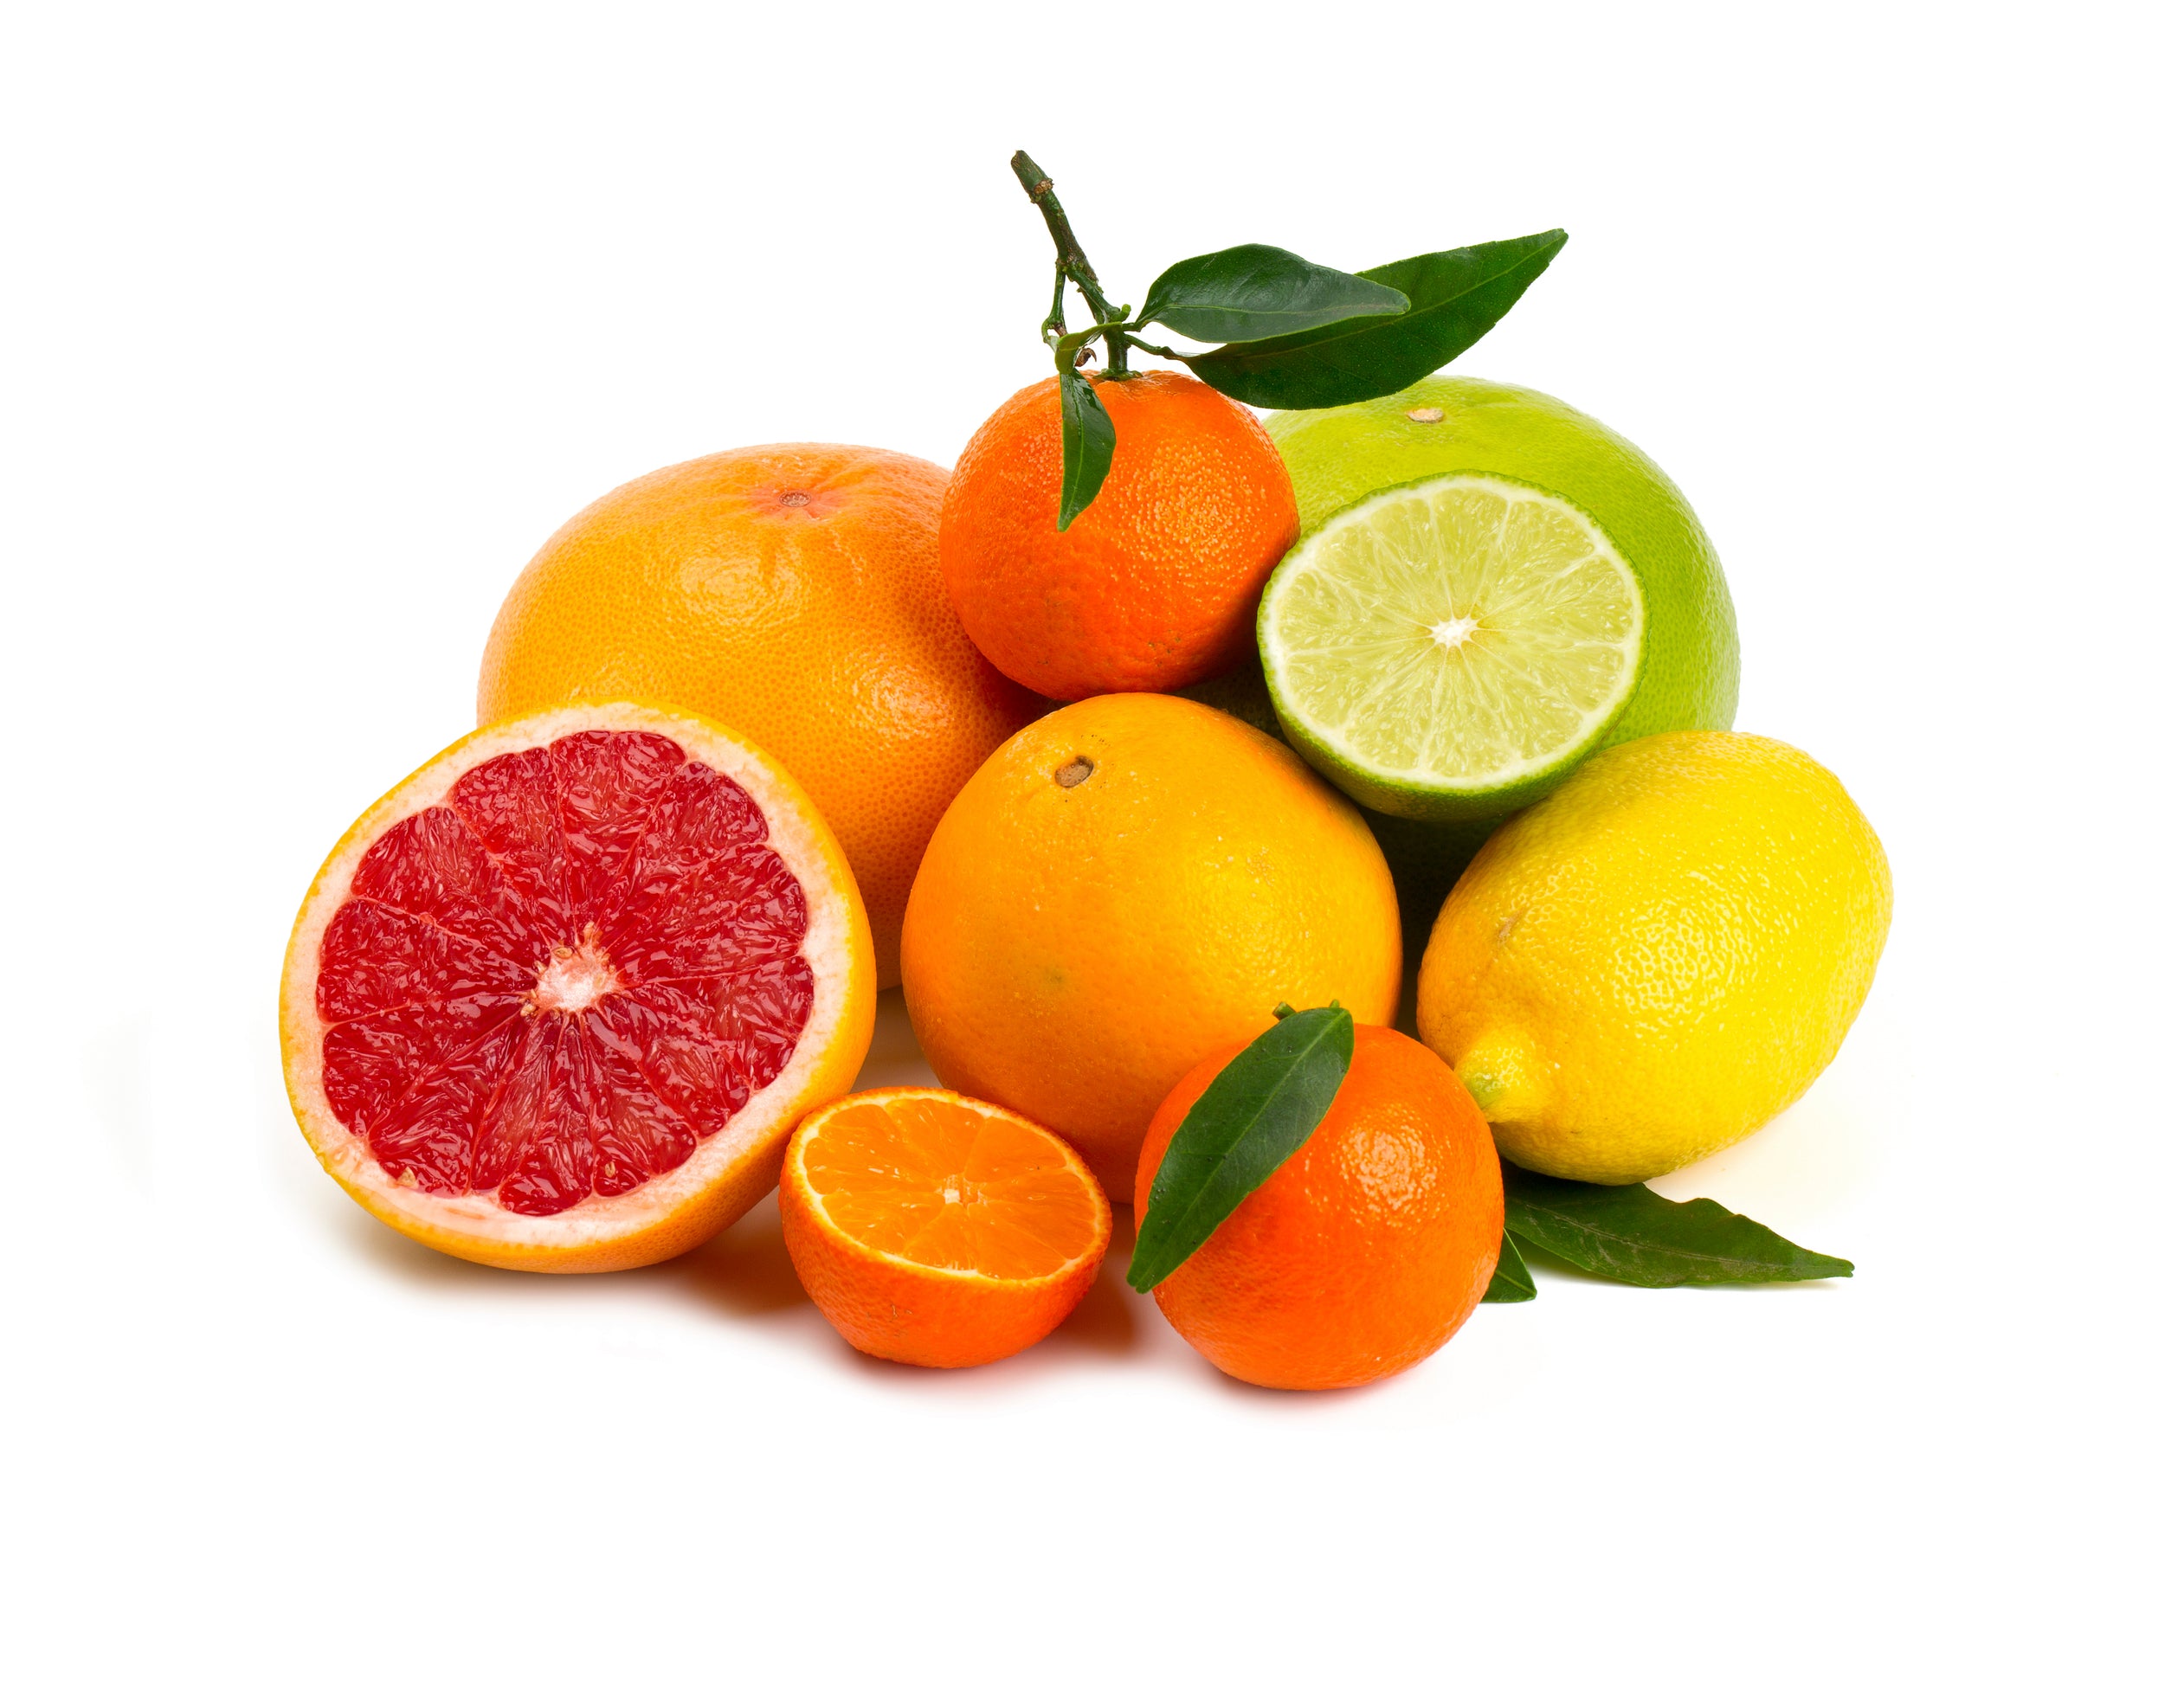 Salubrito Citrus Essential Oils Set for Diffuser, Fragrance Oil